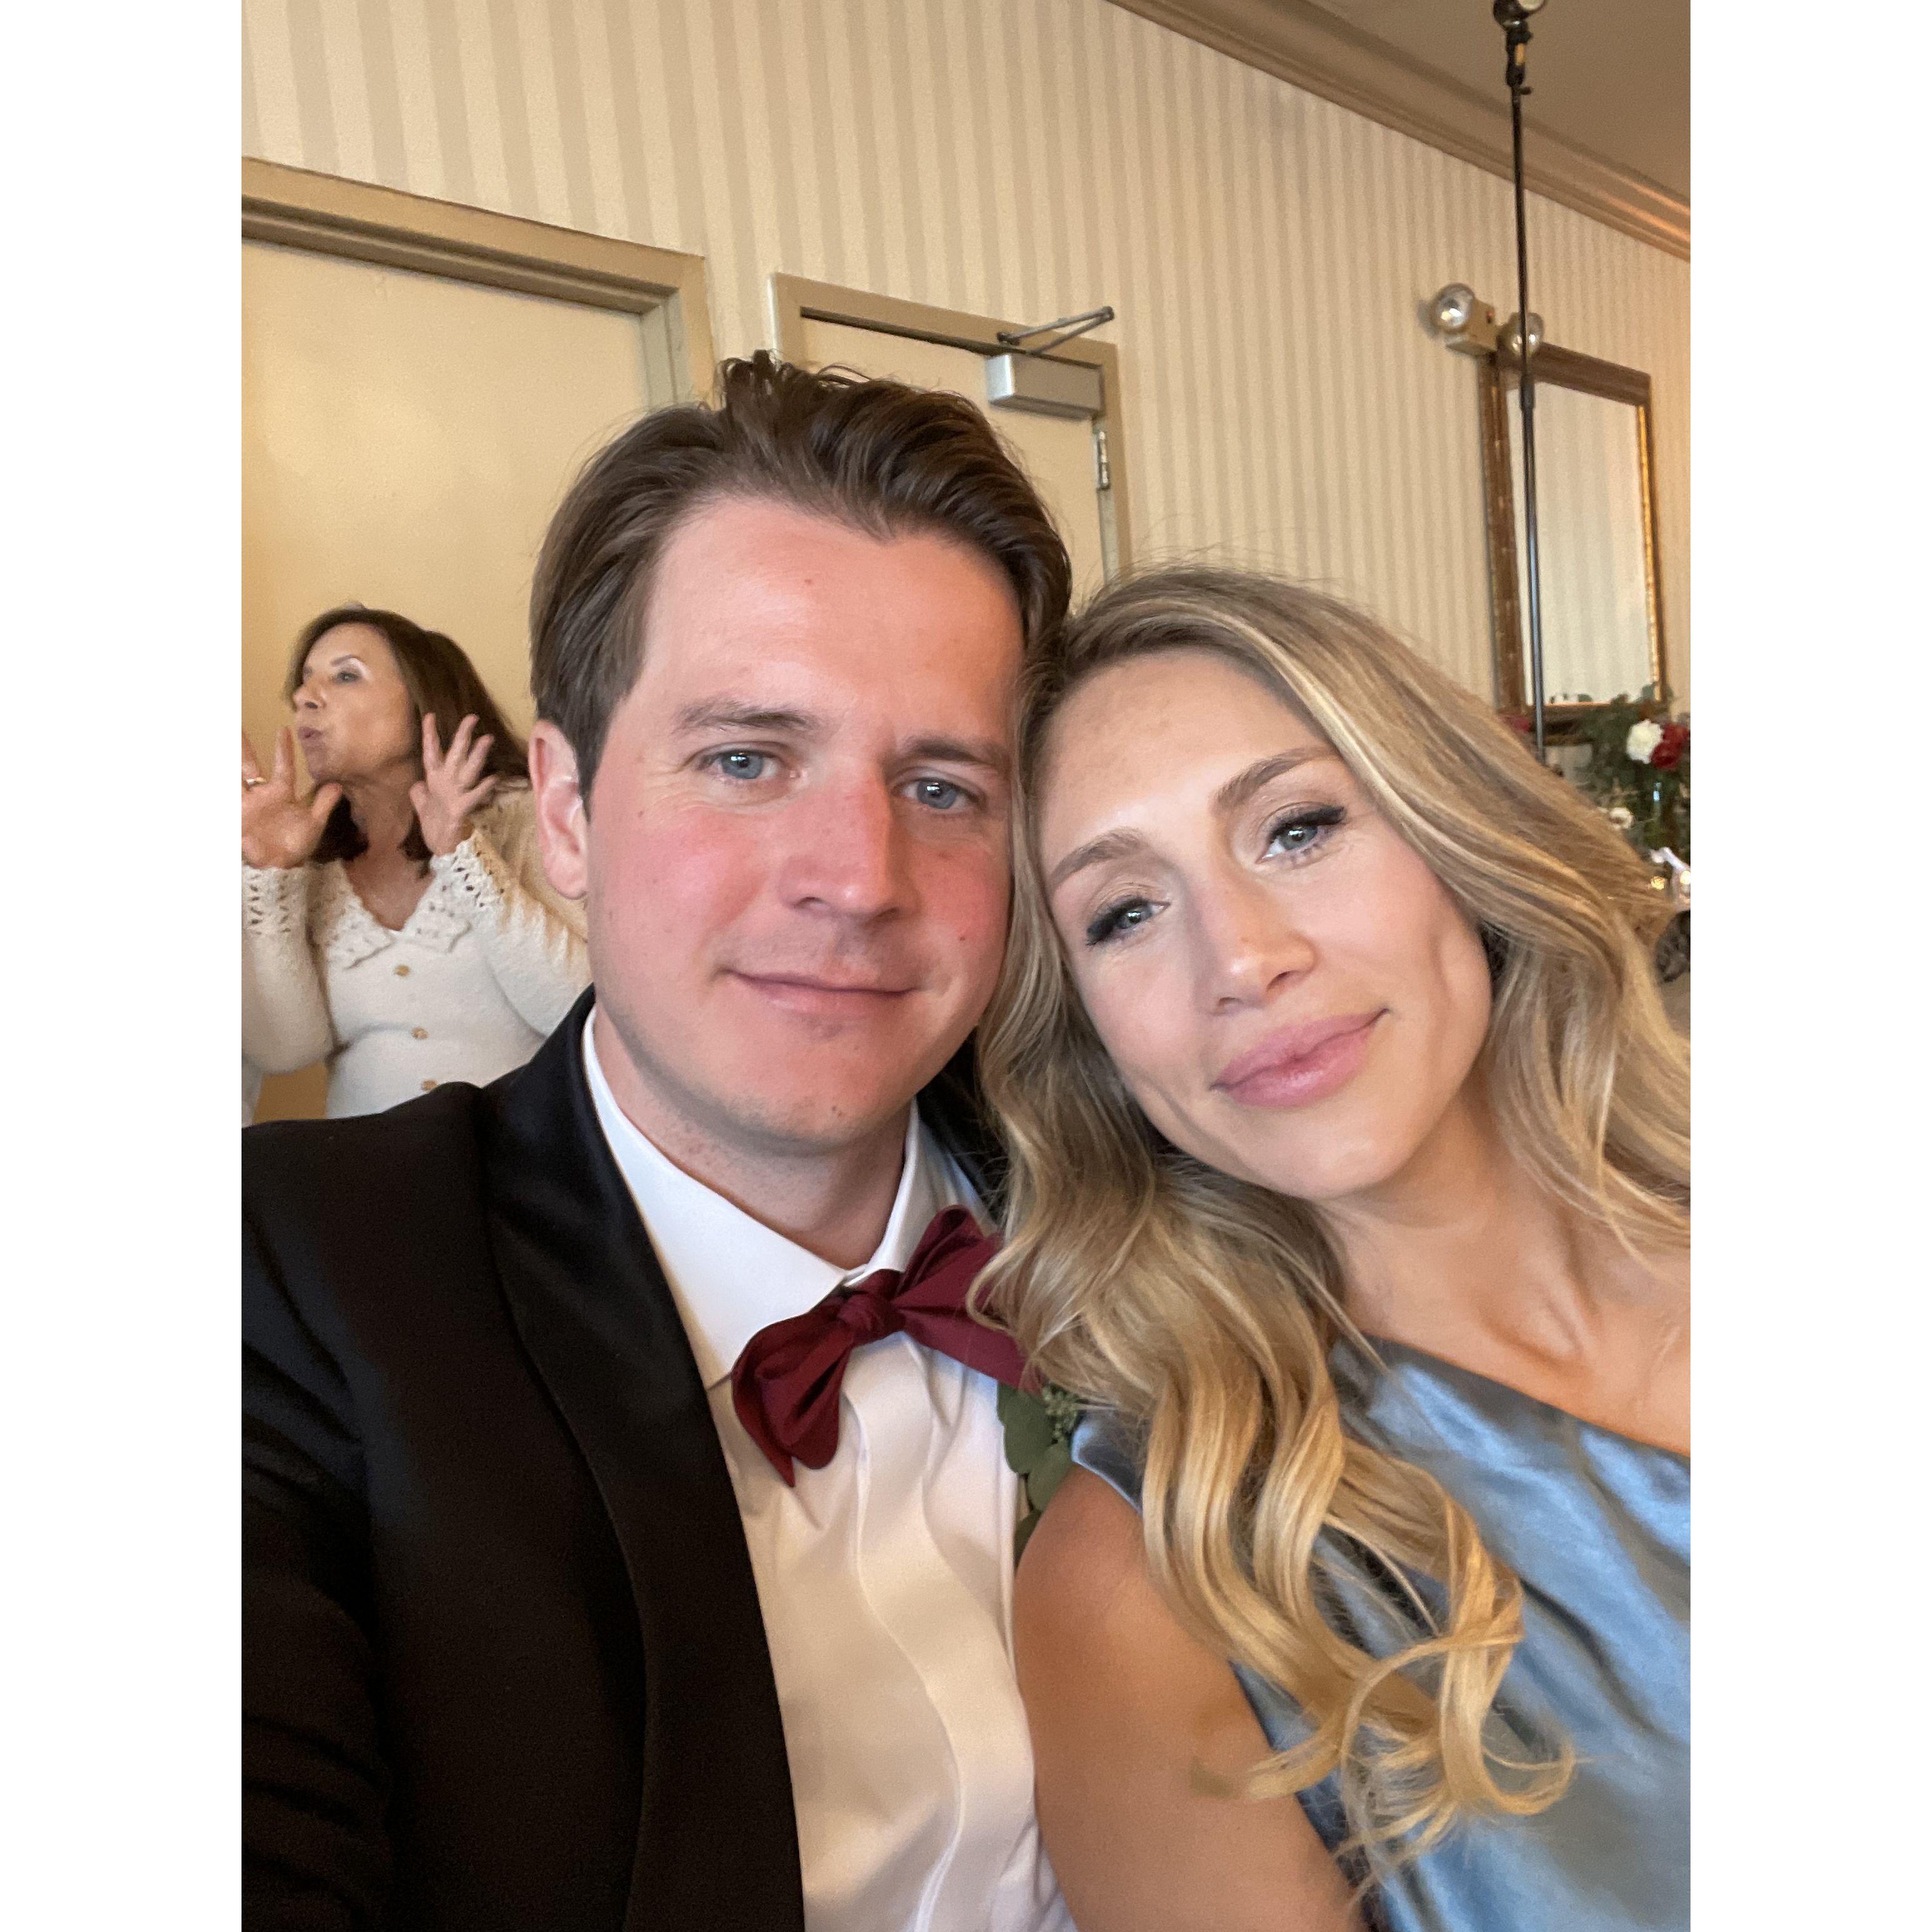 Megan & Josh Wilson's wedding in Redondo Beach, CA - October 2021